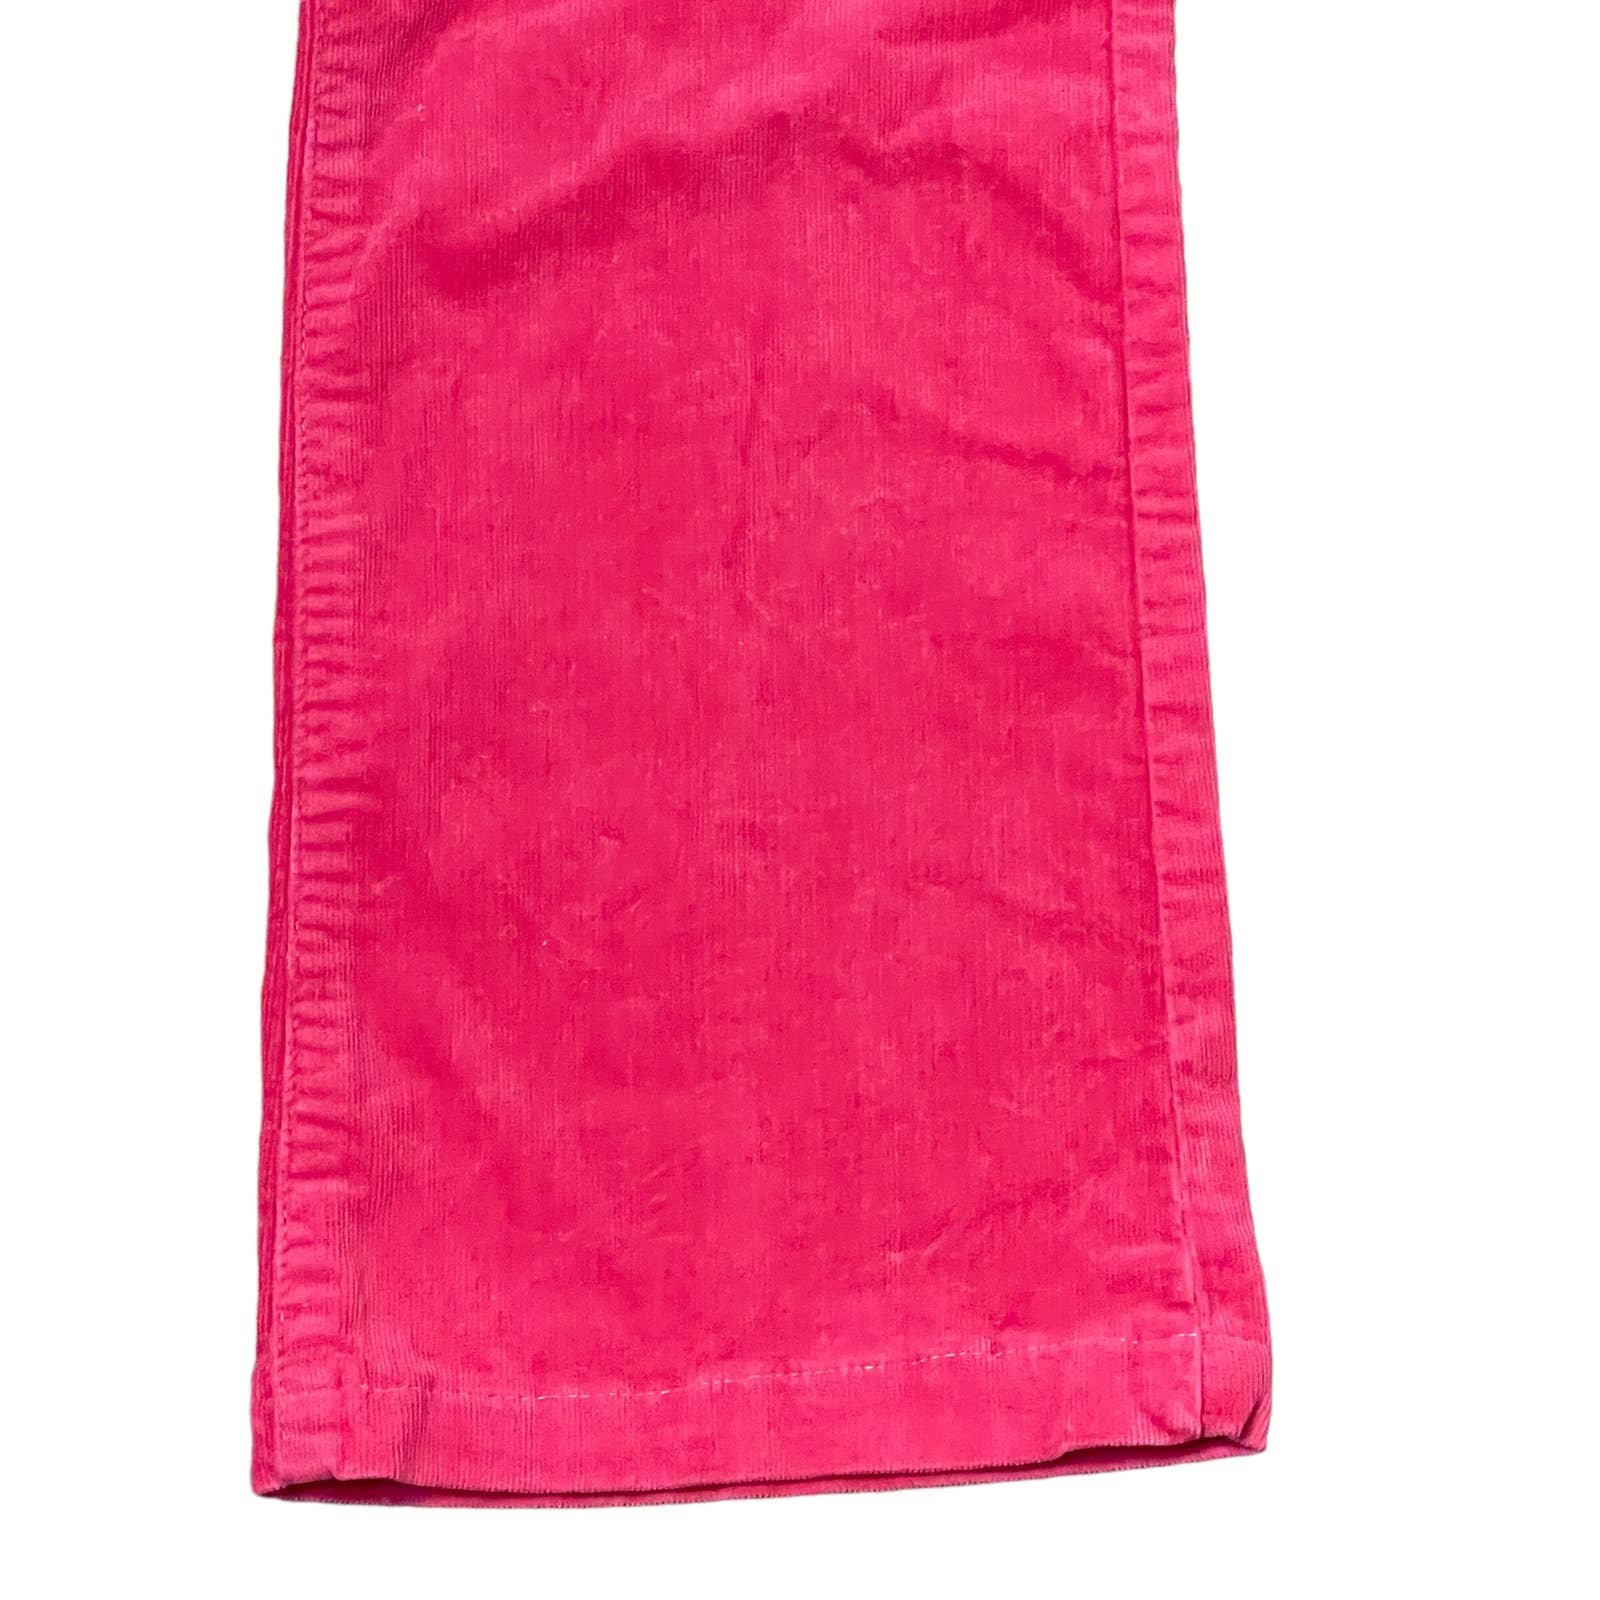 Stylish Express Fuchsia Pink Corduroy Cord Ankle Straight Leg Pants Stretch Women Size 0 oJ6OL9Pyx New Style